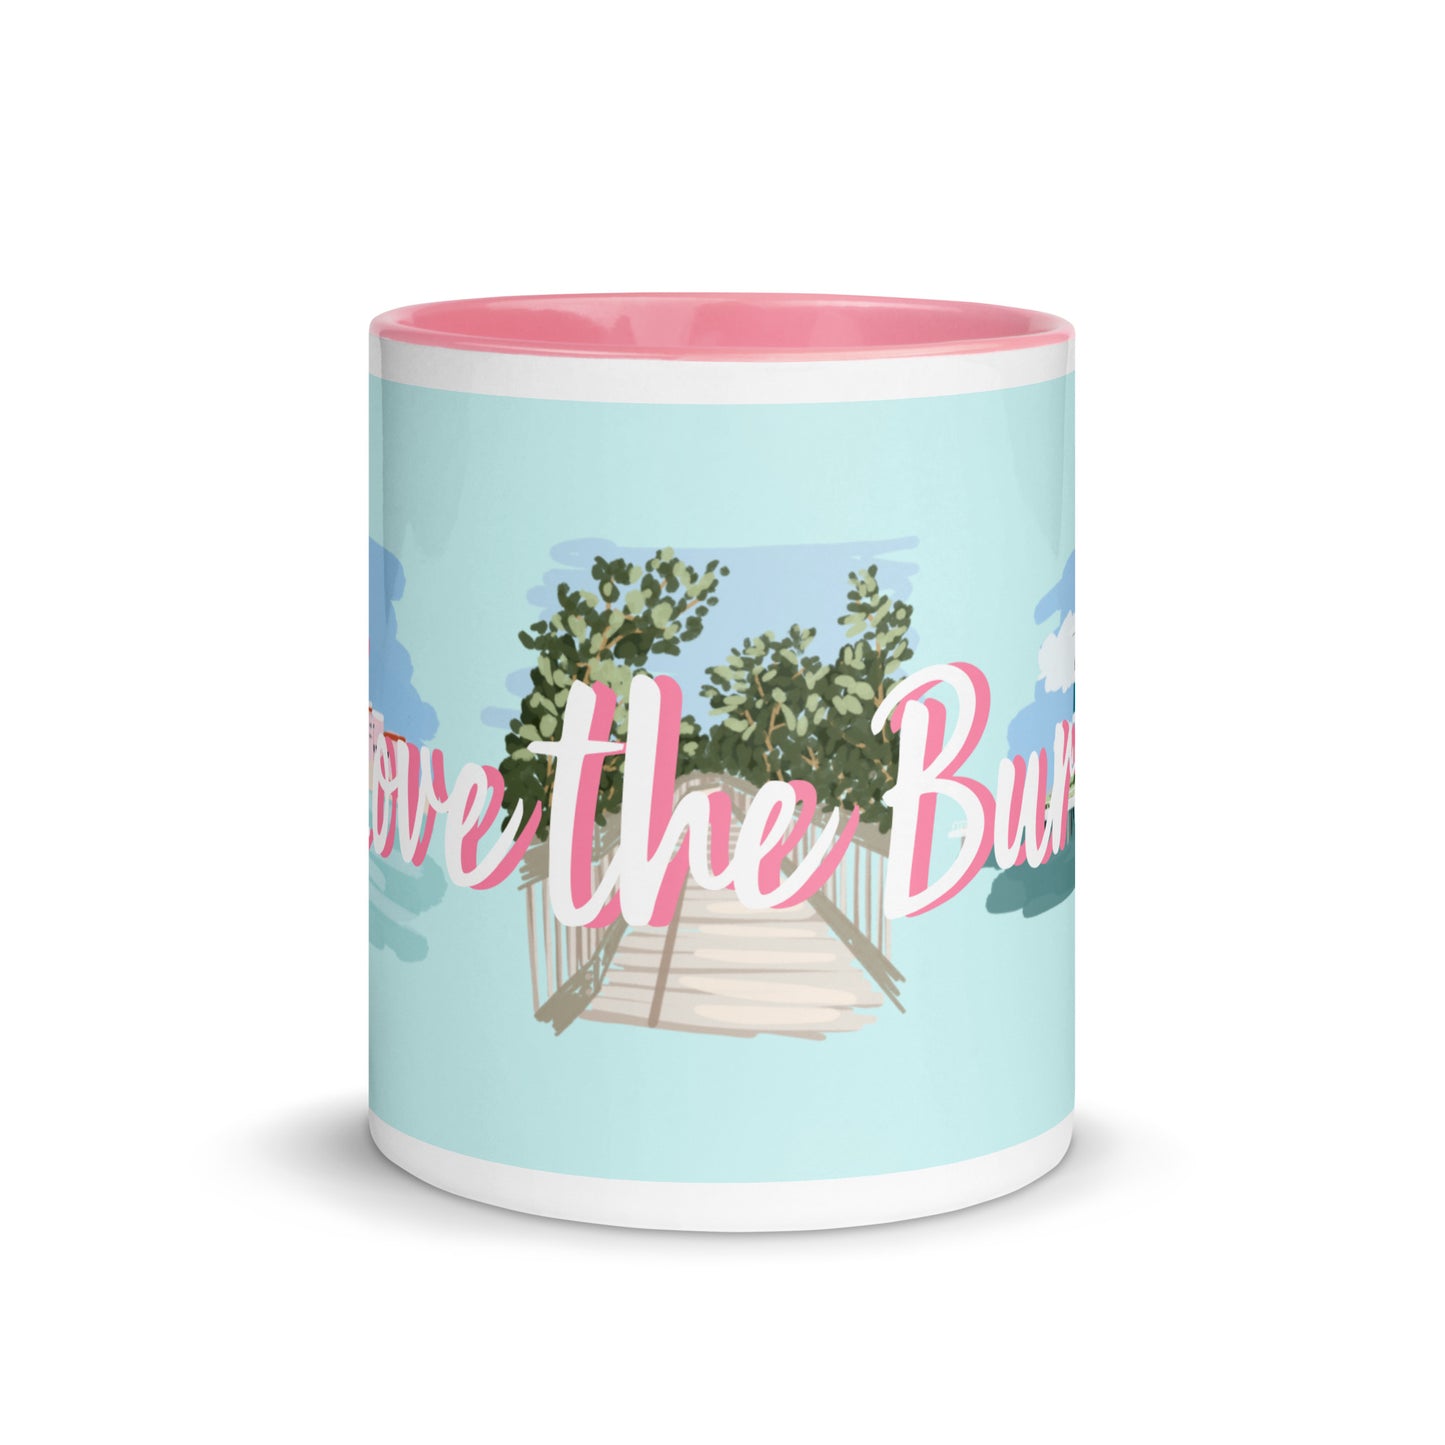 "I Love the Burg" - Pink Mug